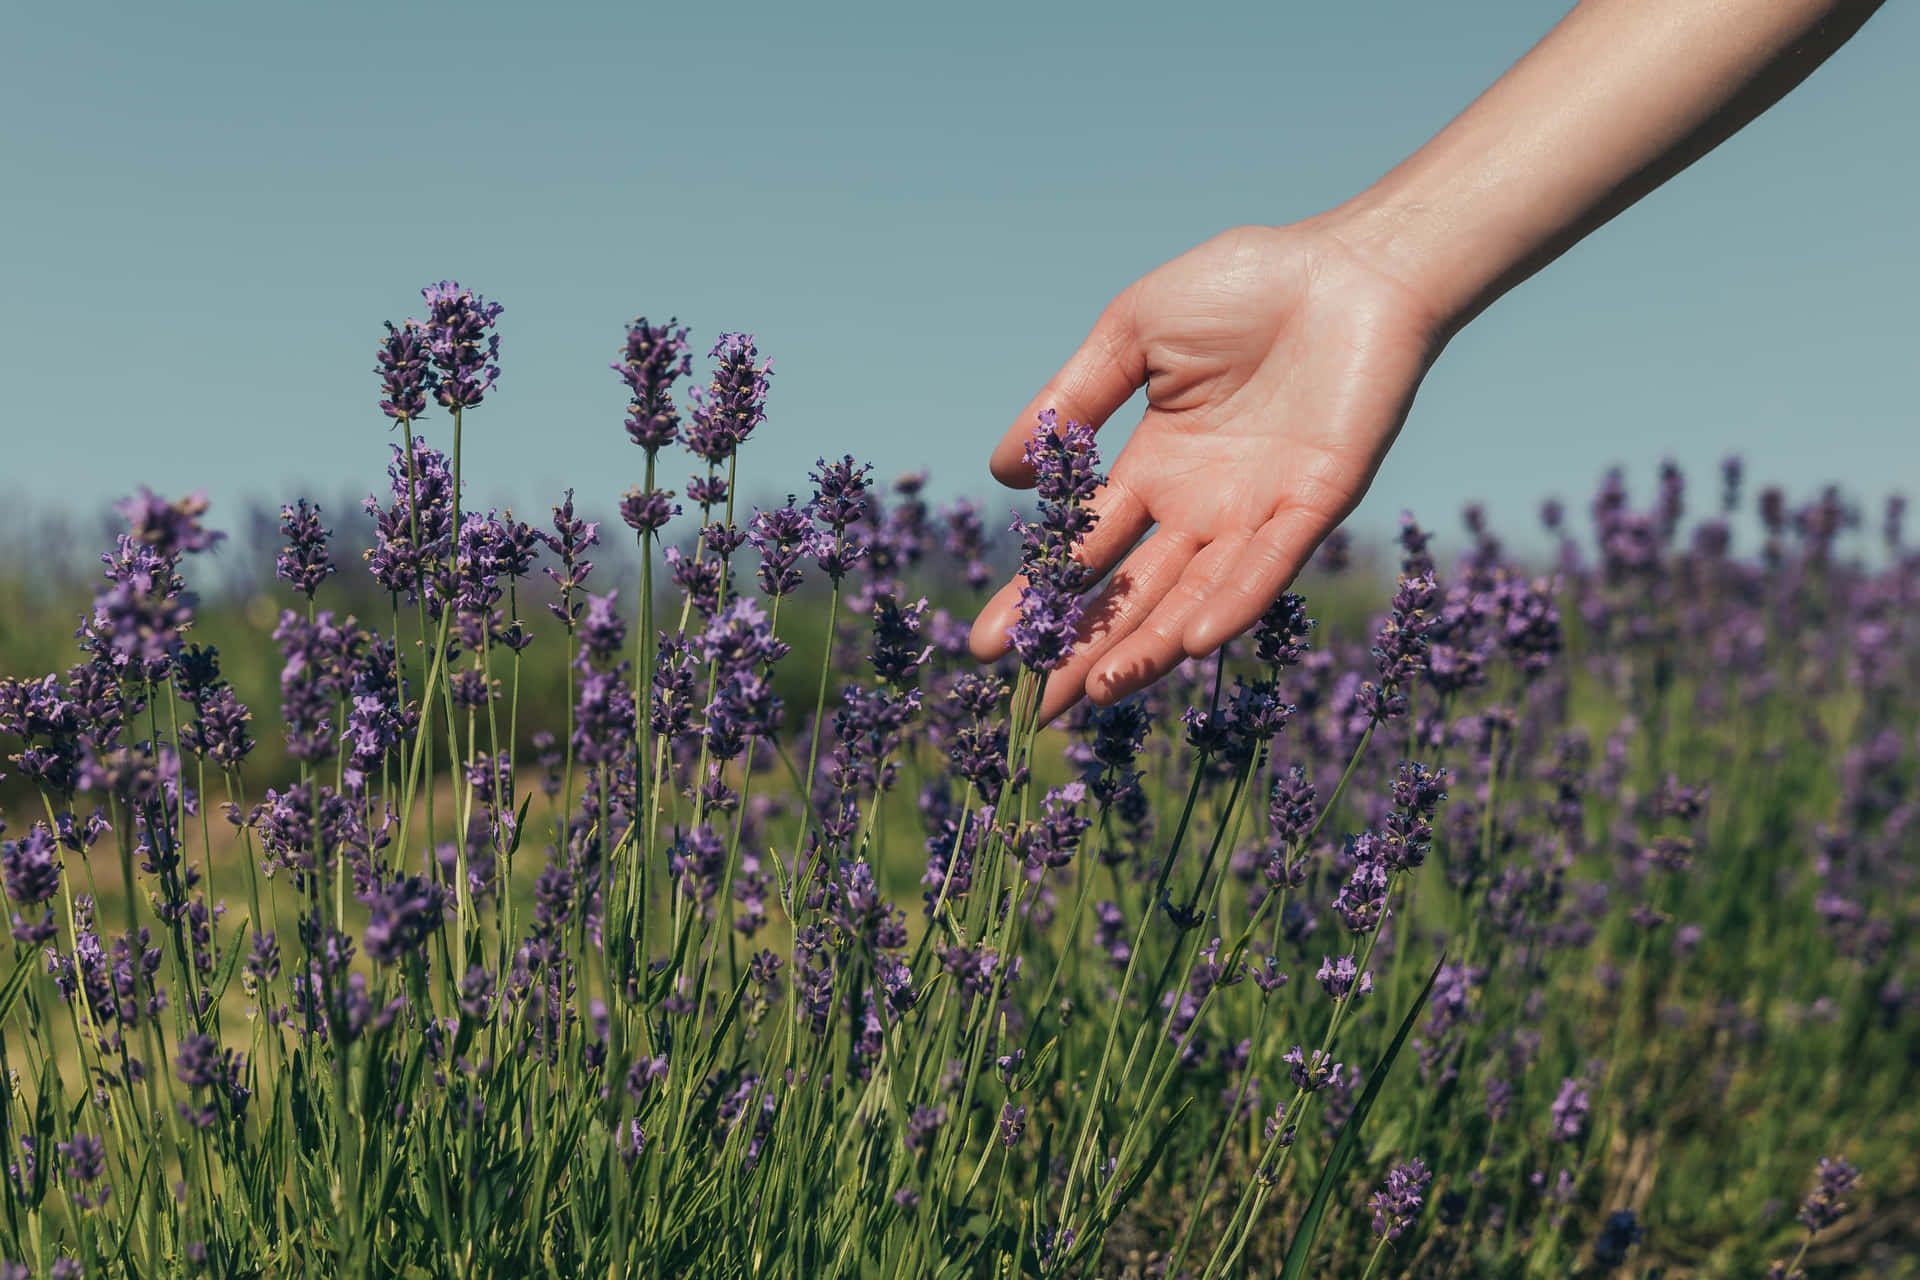 "mesmerizing Field Of Lavender In Full Bloom"